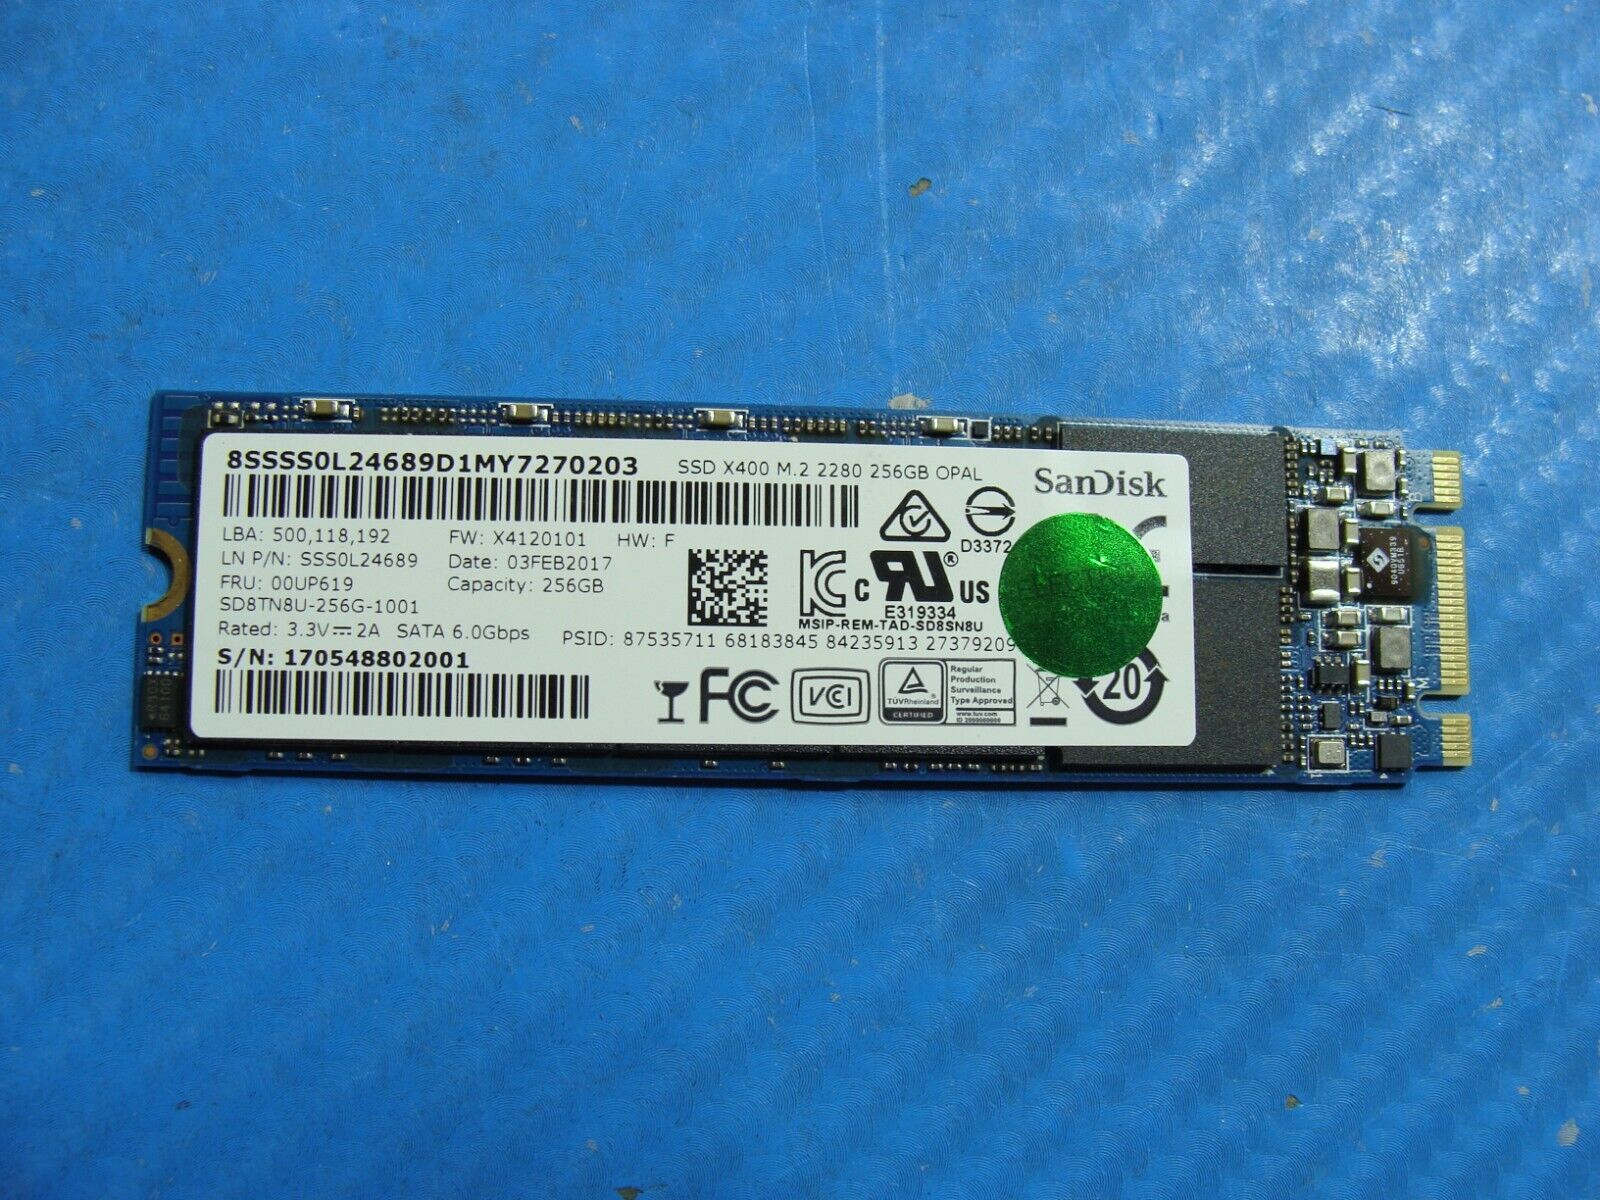 Lenovo X1 Carbon 4th SanDisk 256GB SATA M.2 Solid State Drive SD8TN8U-256G-1001